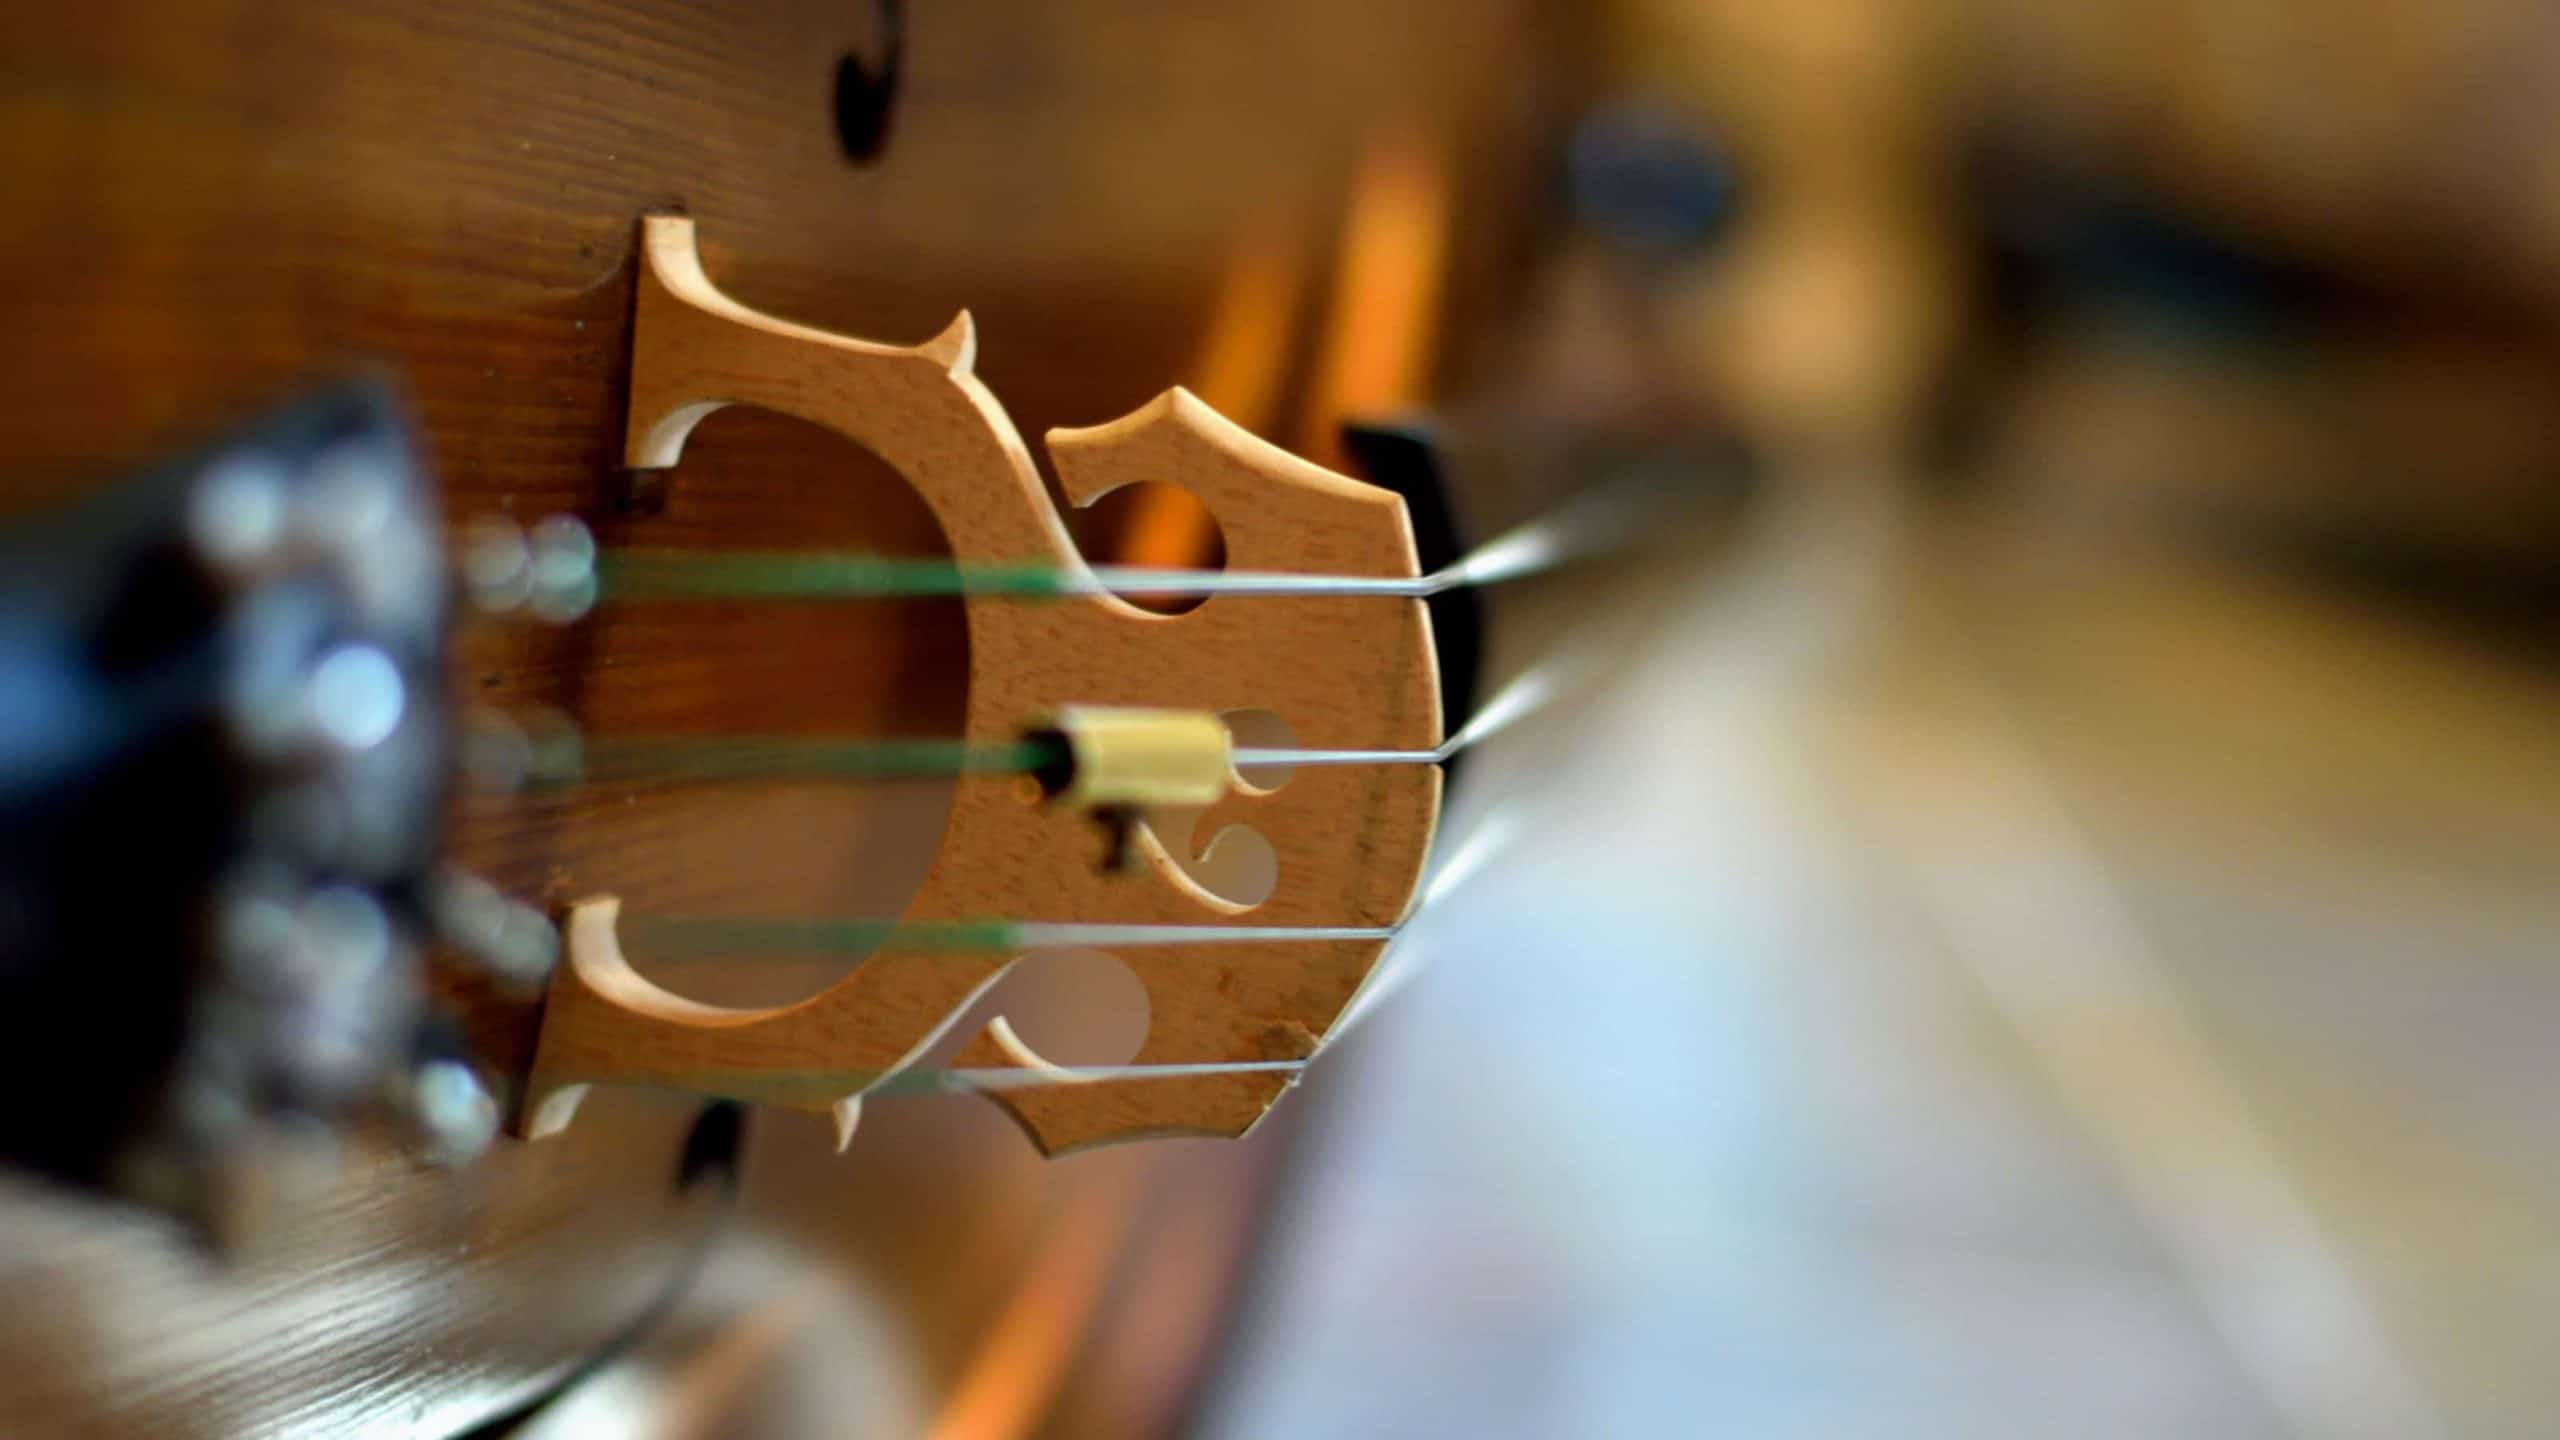 Cello strings gleam. Creative commons courtesy photo.